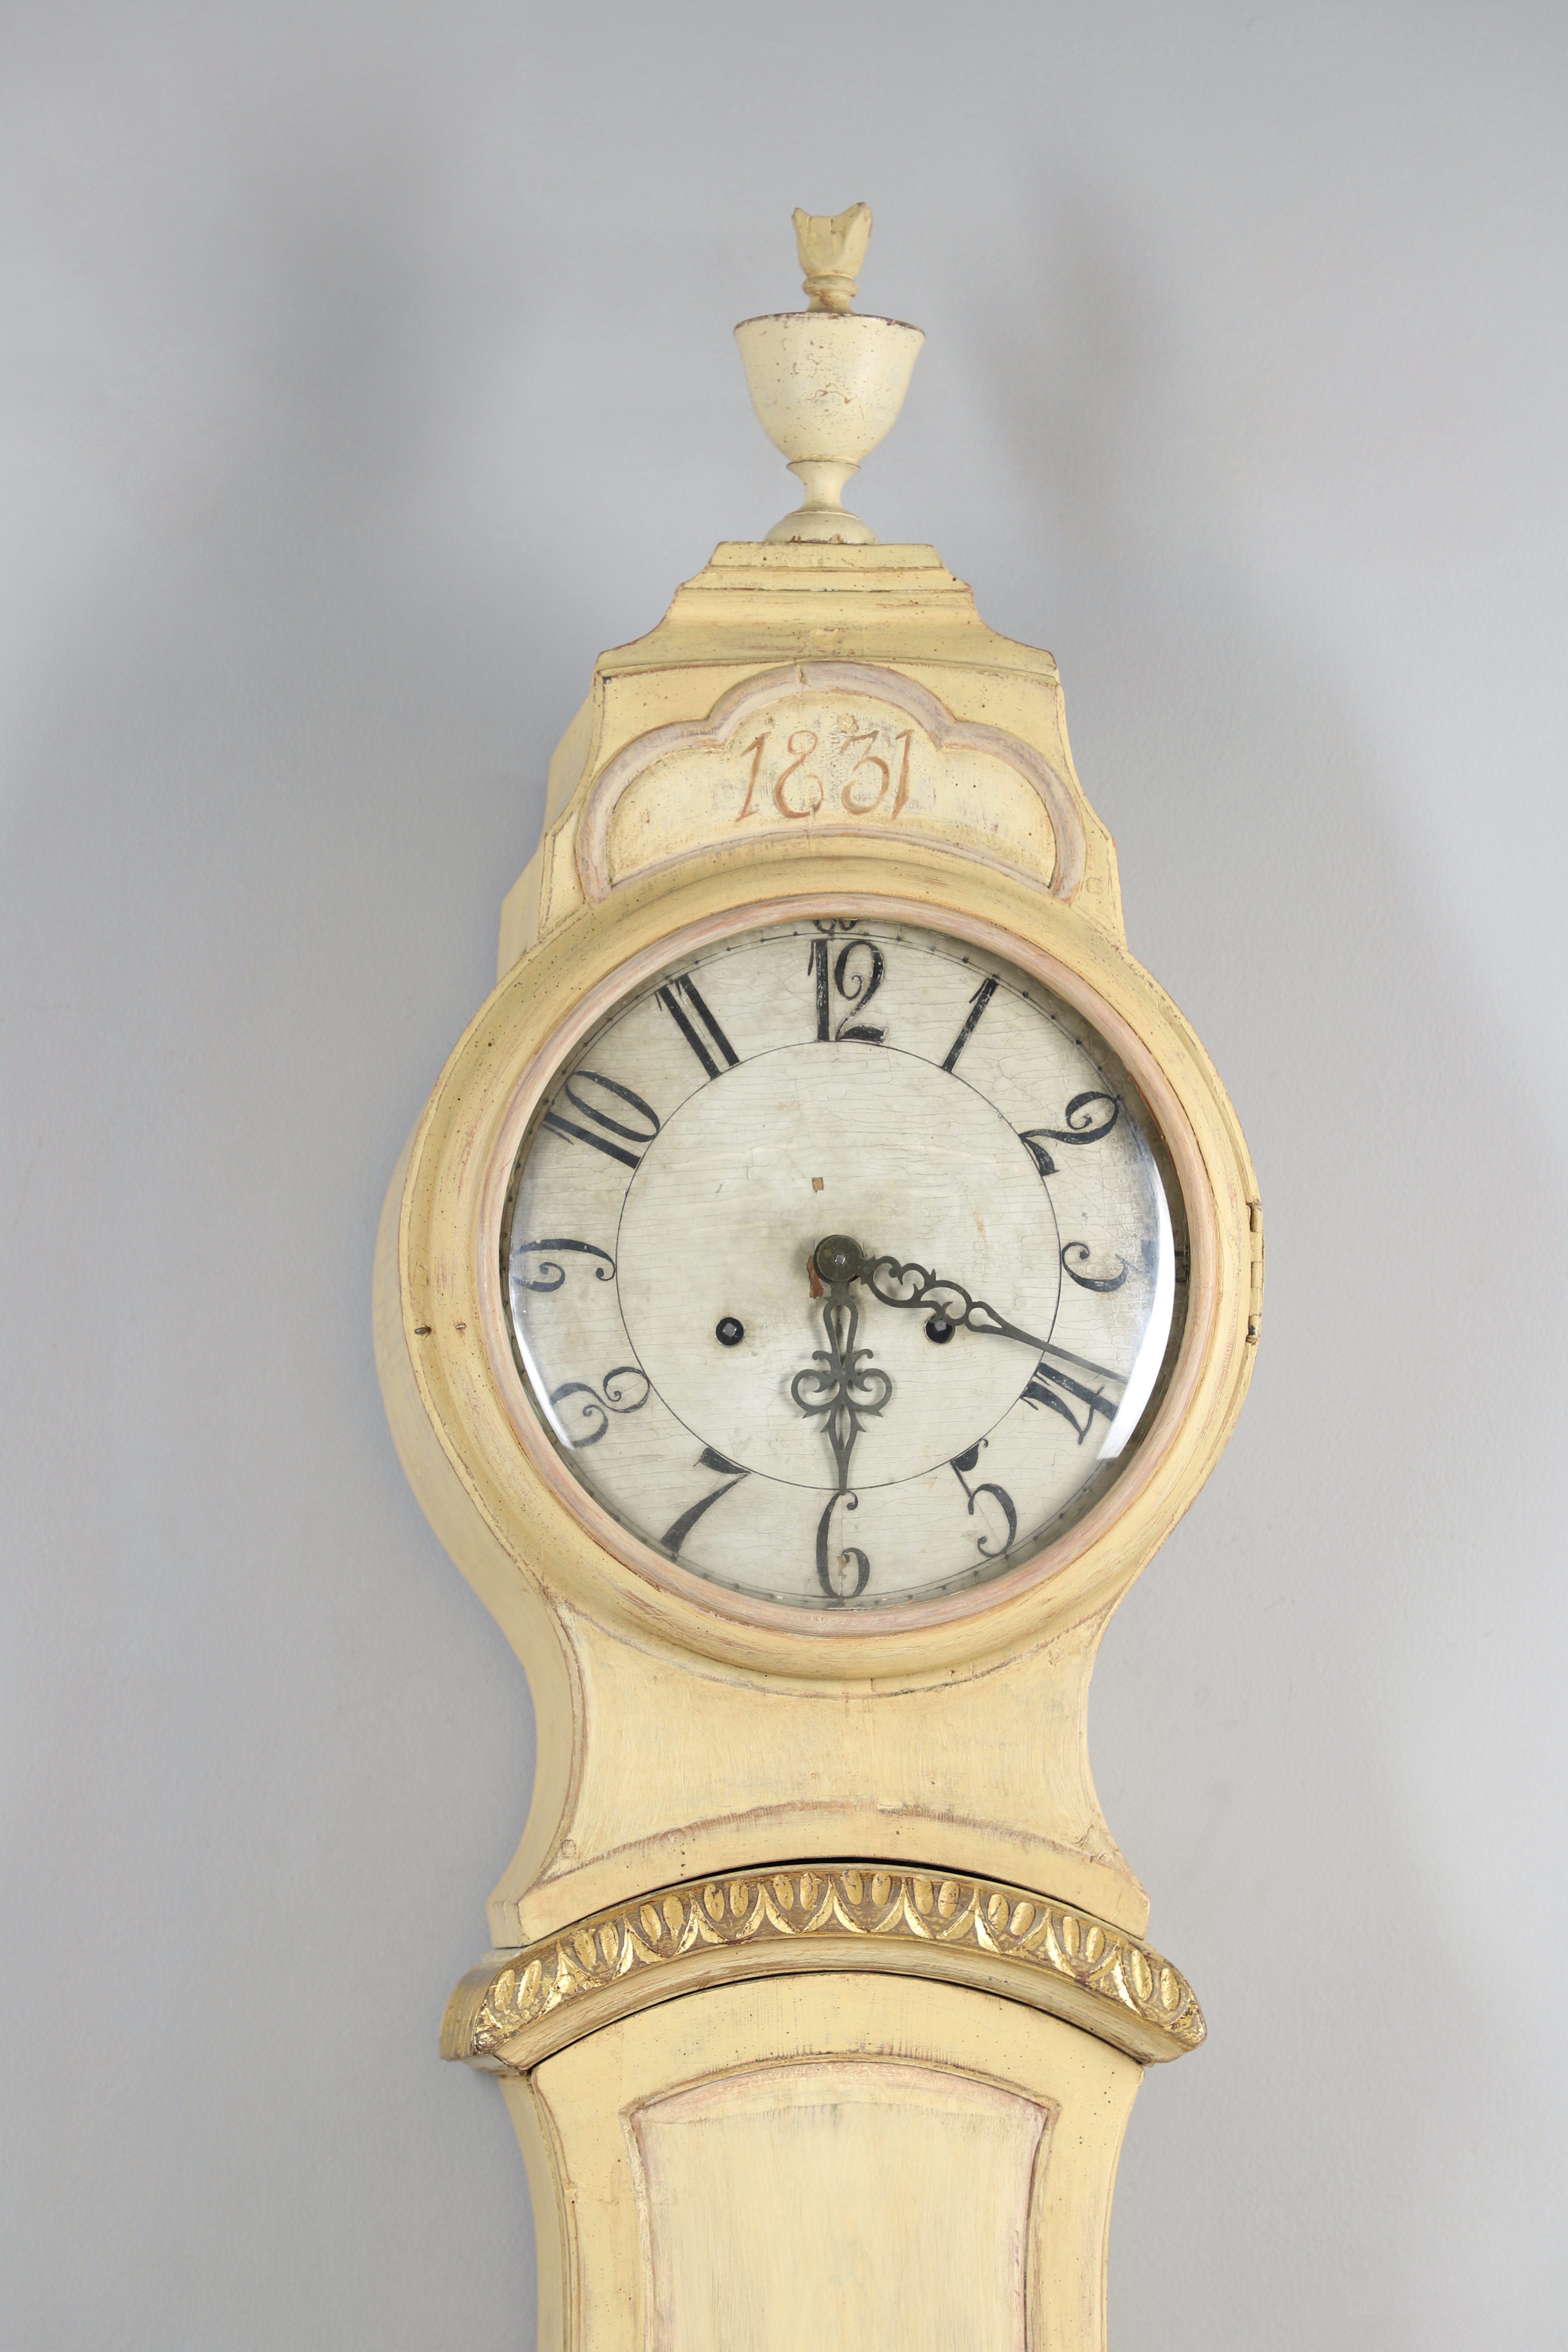 A 19TH CENTURY FINNISH 'COMTOISE' CLOCK, Ã–STROBOTHNIA REGION. - Image 3 of 26